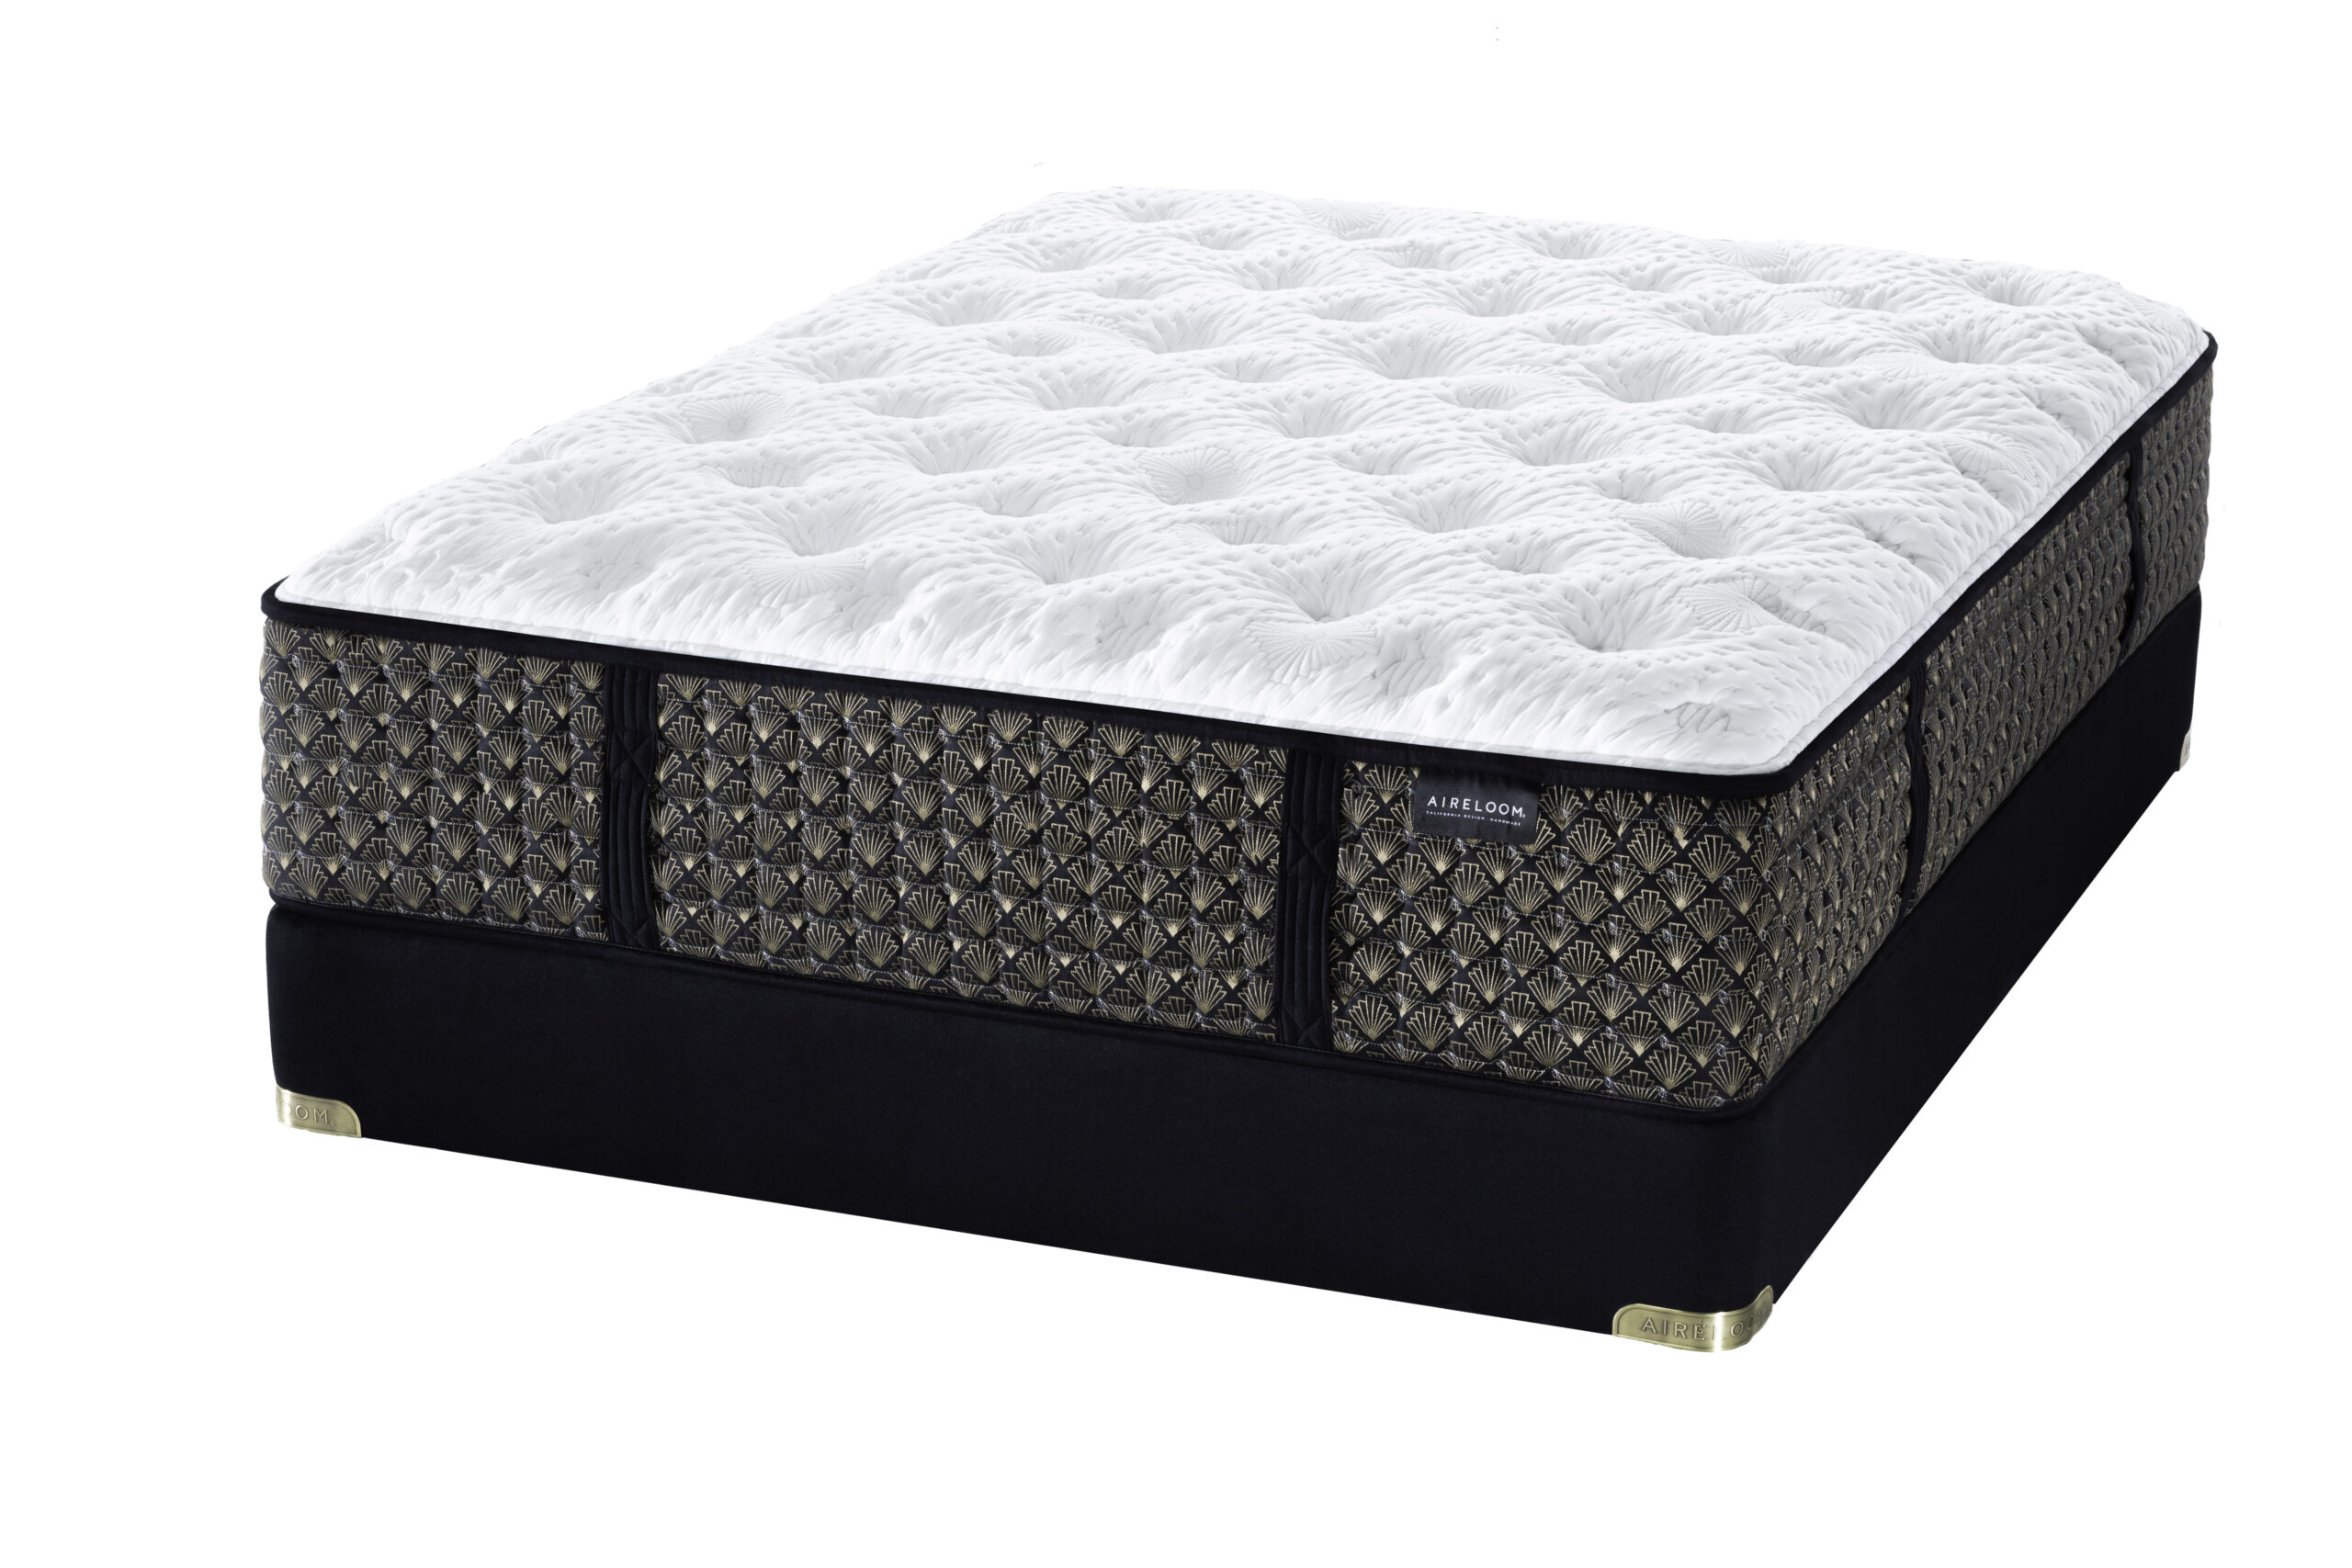 fieldcrest luxury plush mattress pad reviews